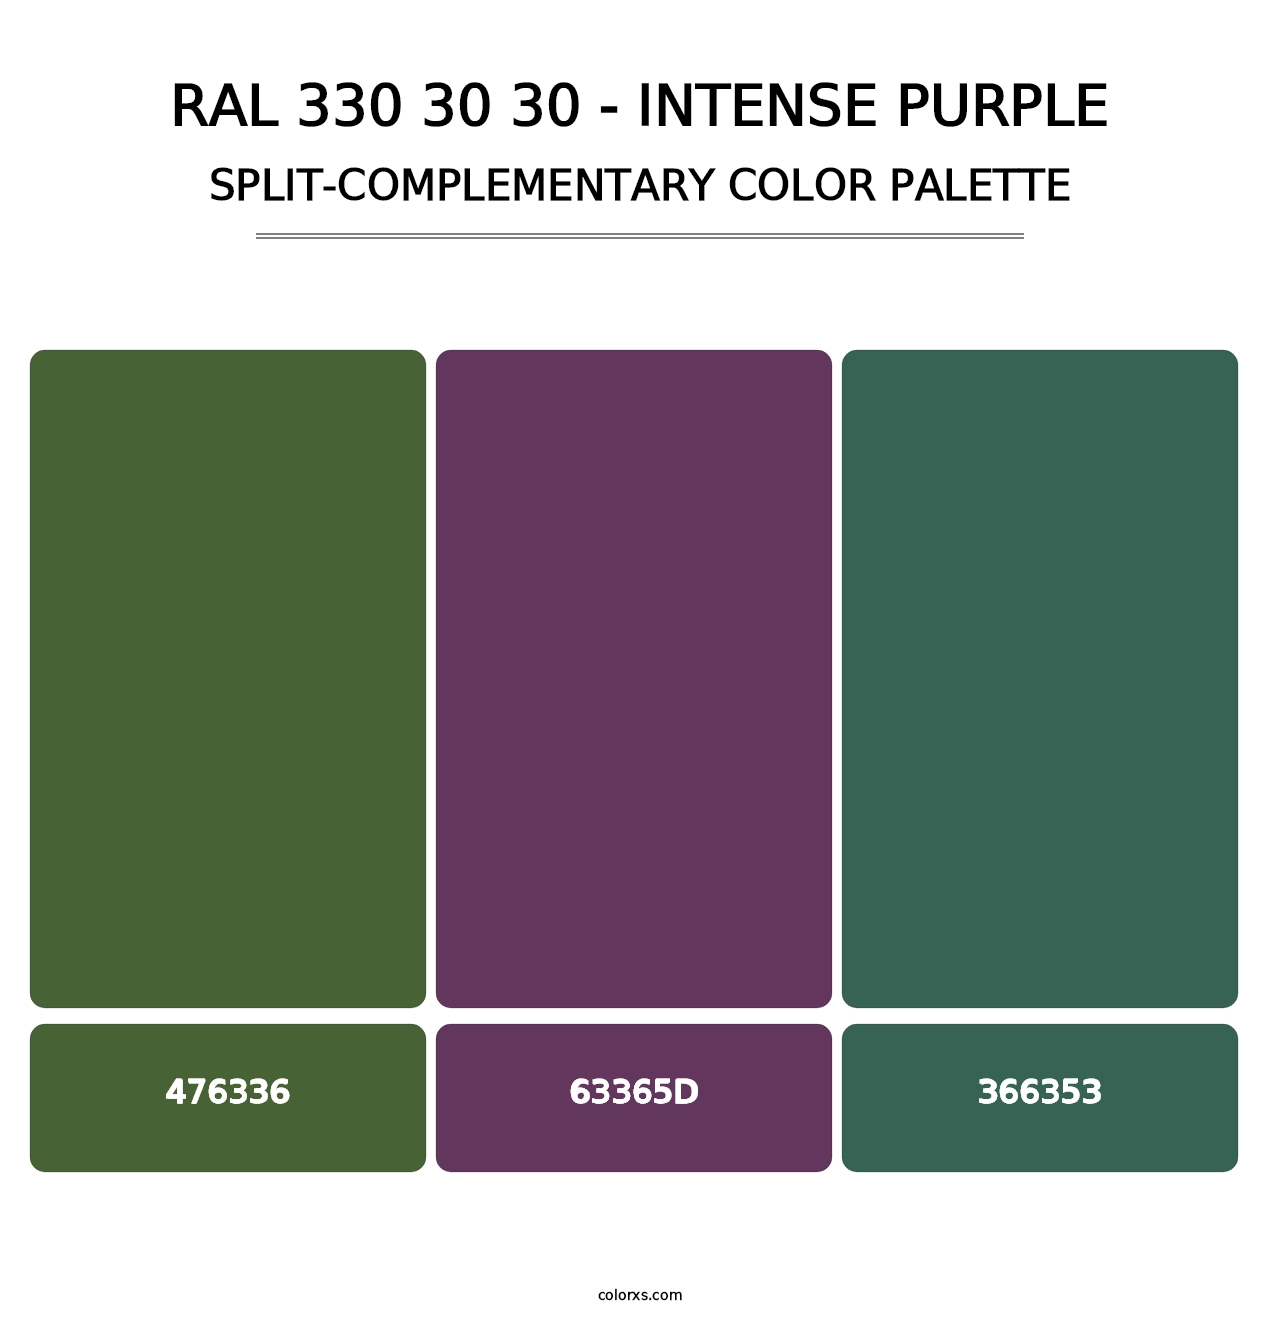 RAL 330 30 30 - Intense Purple - Split-Complementary Color Palette